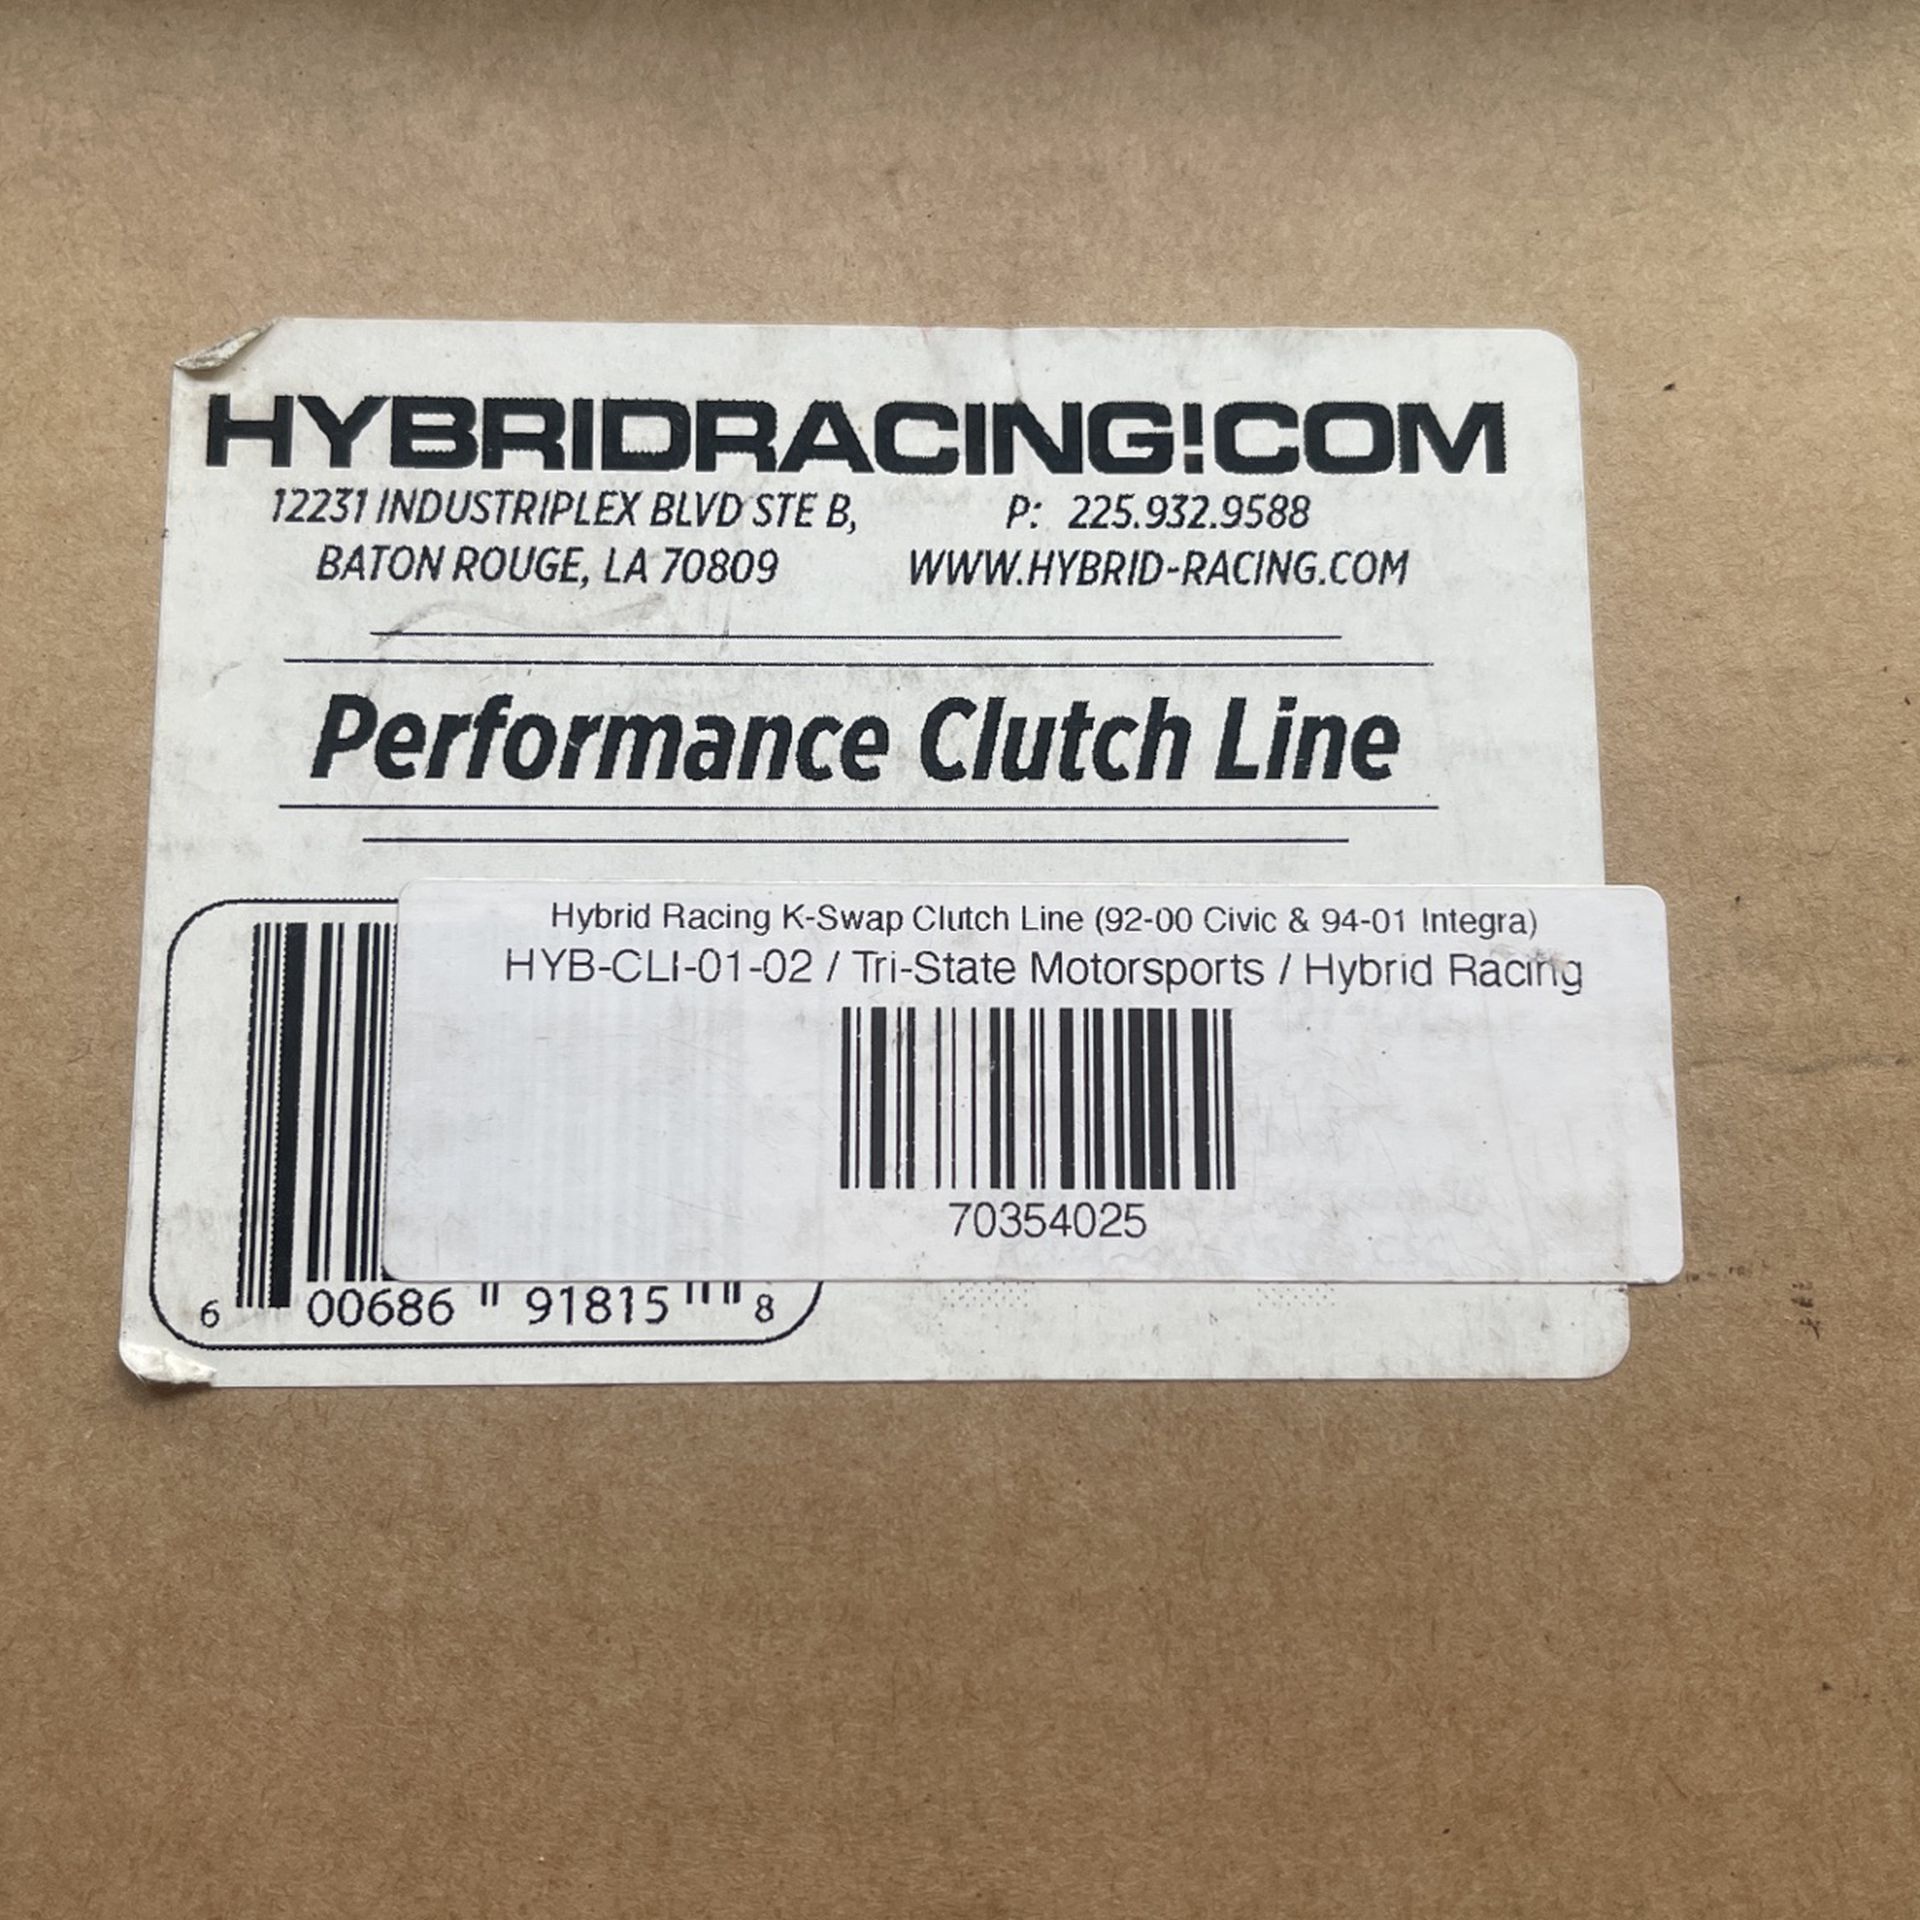 Hybrid Racing Clutch Line